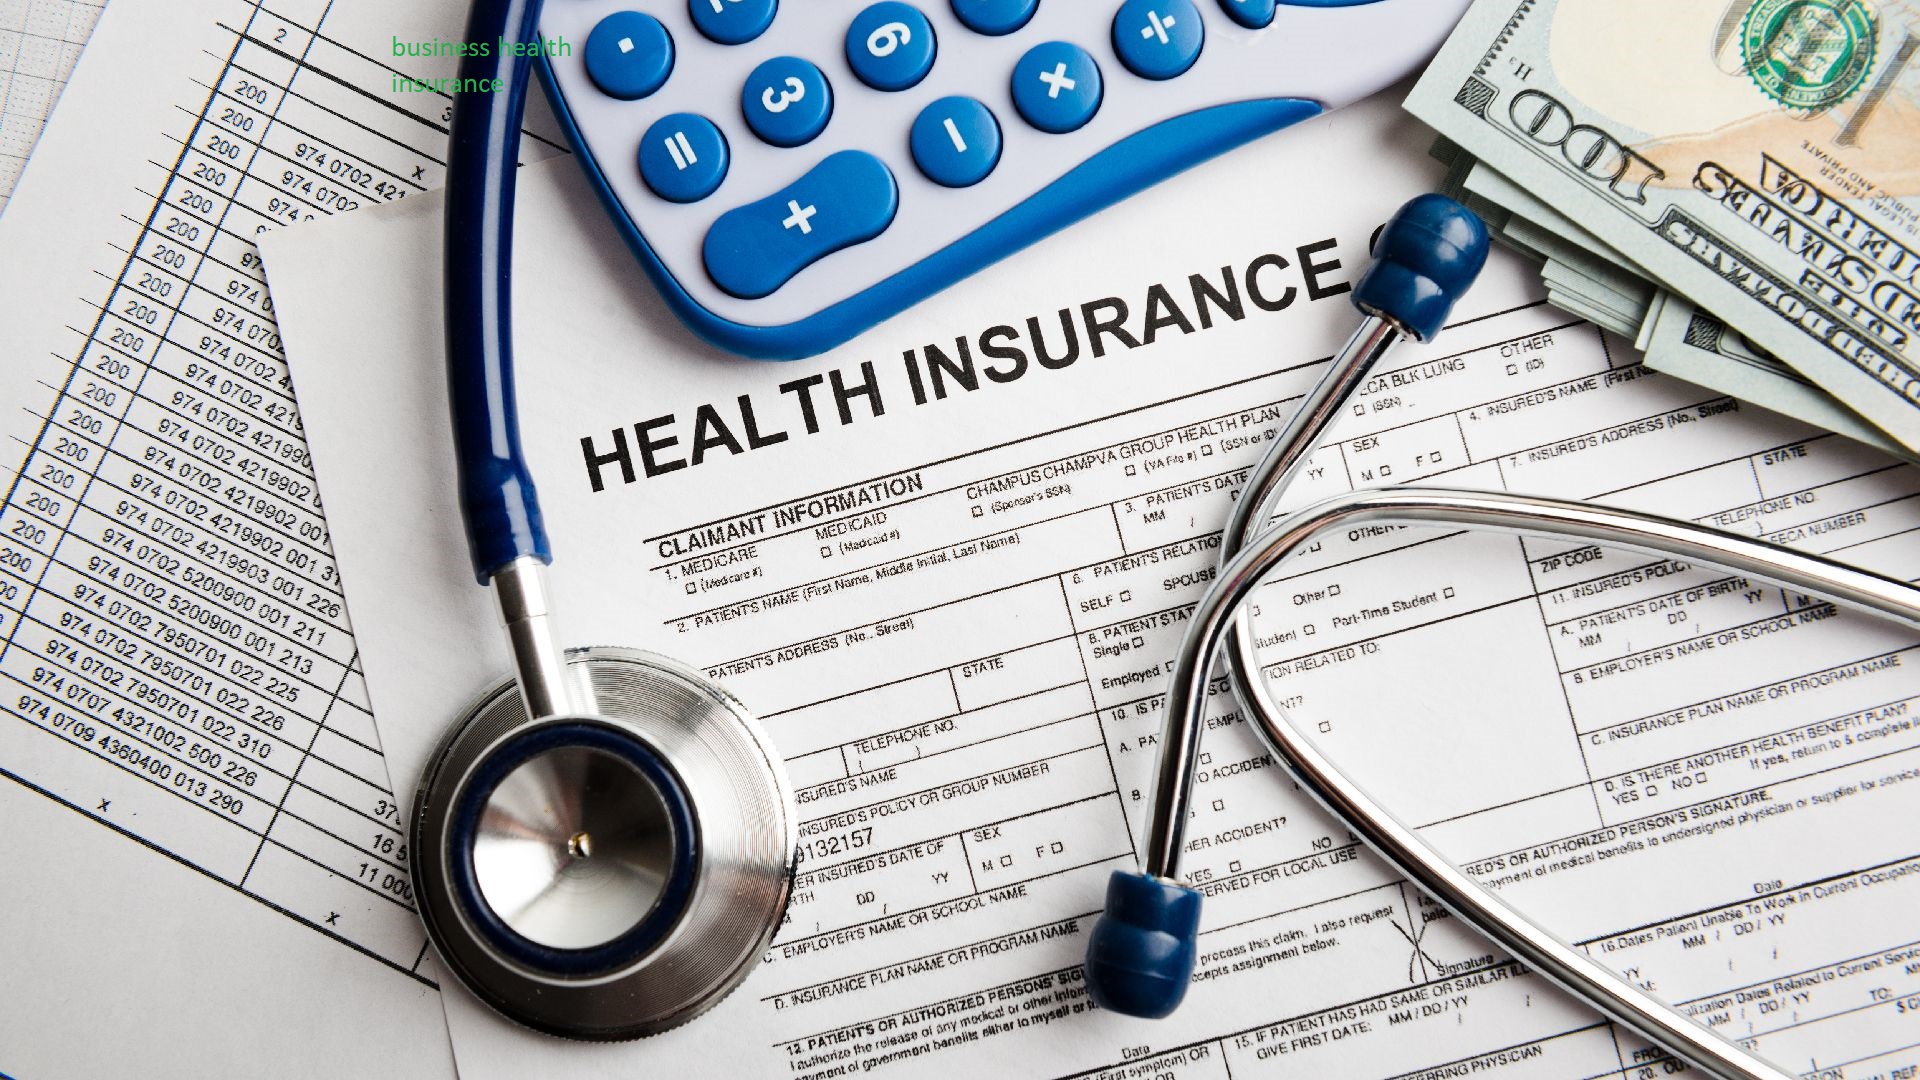 business health insurance